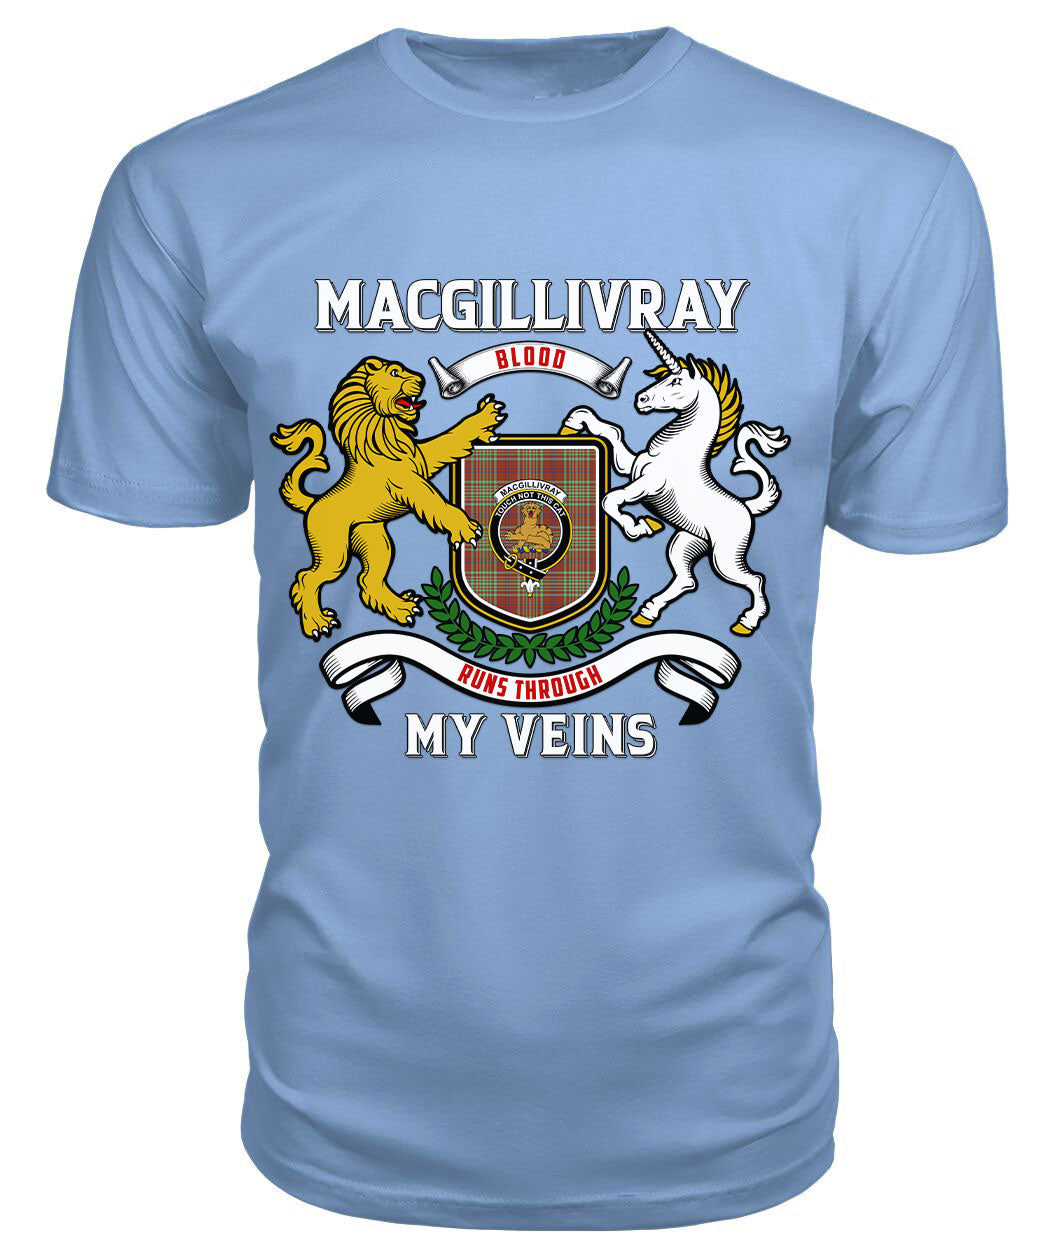 MacGillivray Hunting Ancient Tartan Crest 2D T-shirt - Blood Runs Through My Veins Style